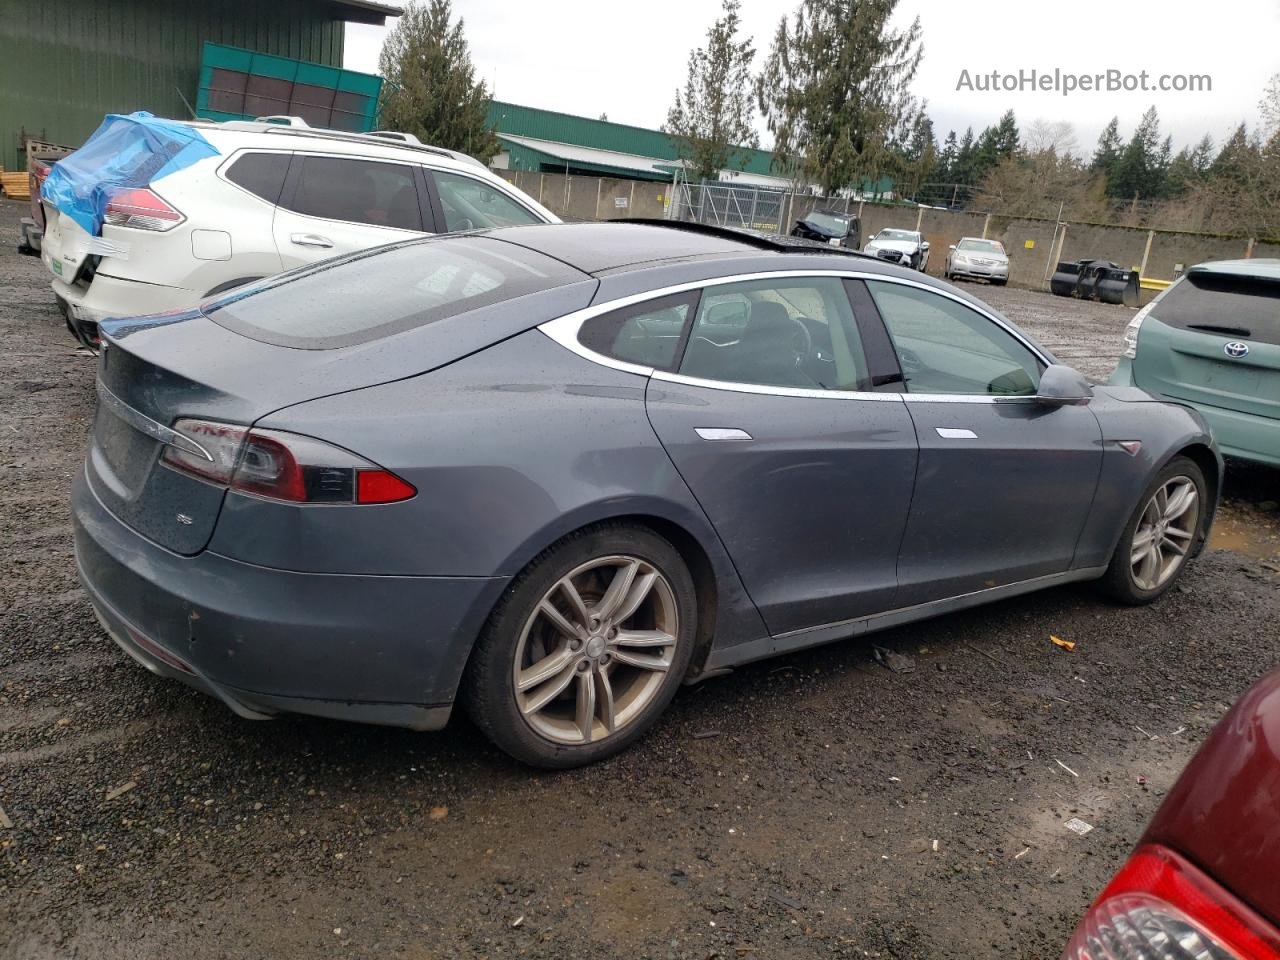 2014 Tesla Model S  Серый vin: 5YJSA1H17EFP45961